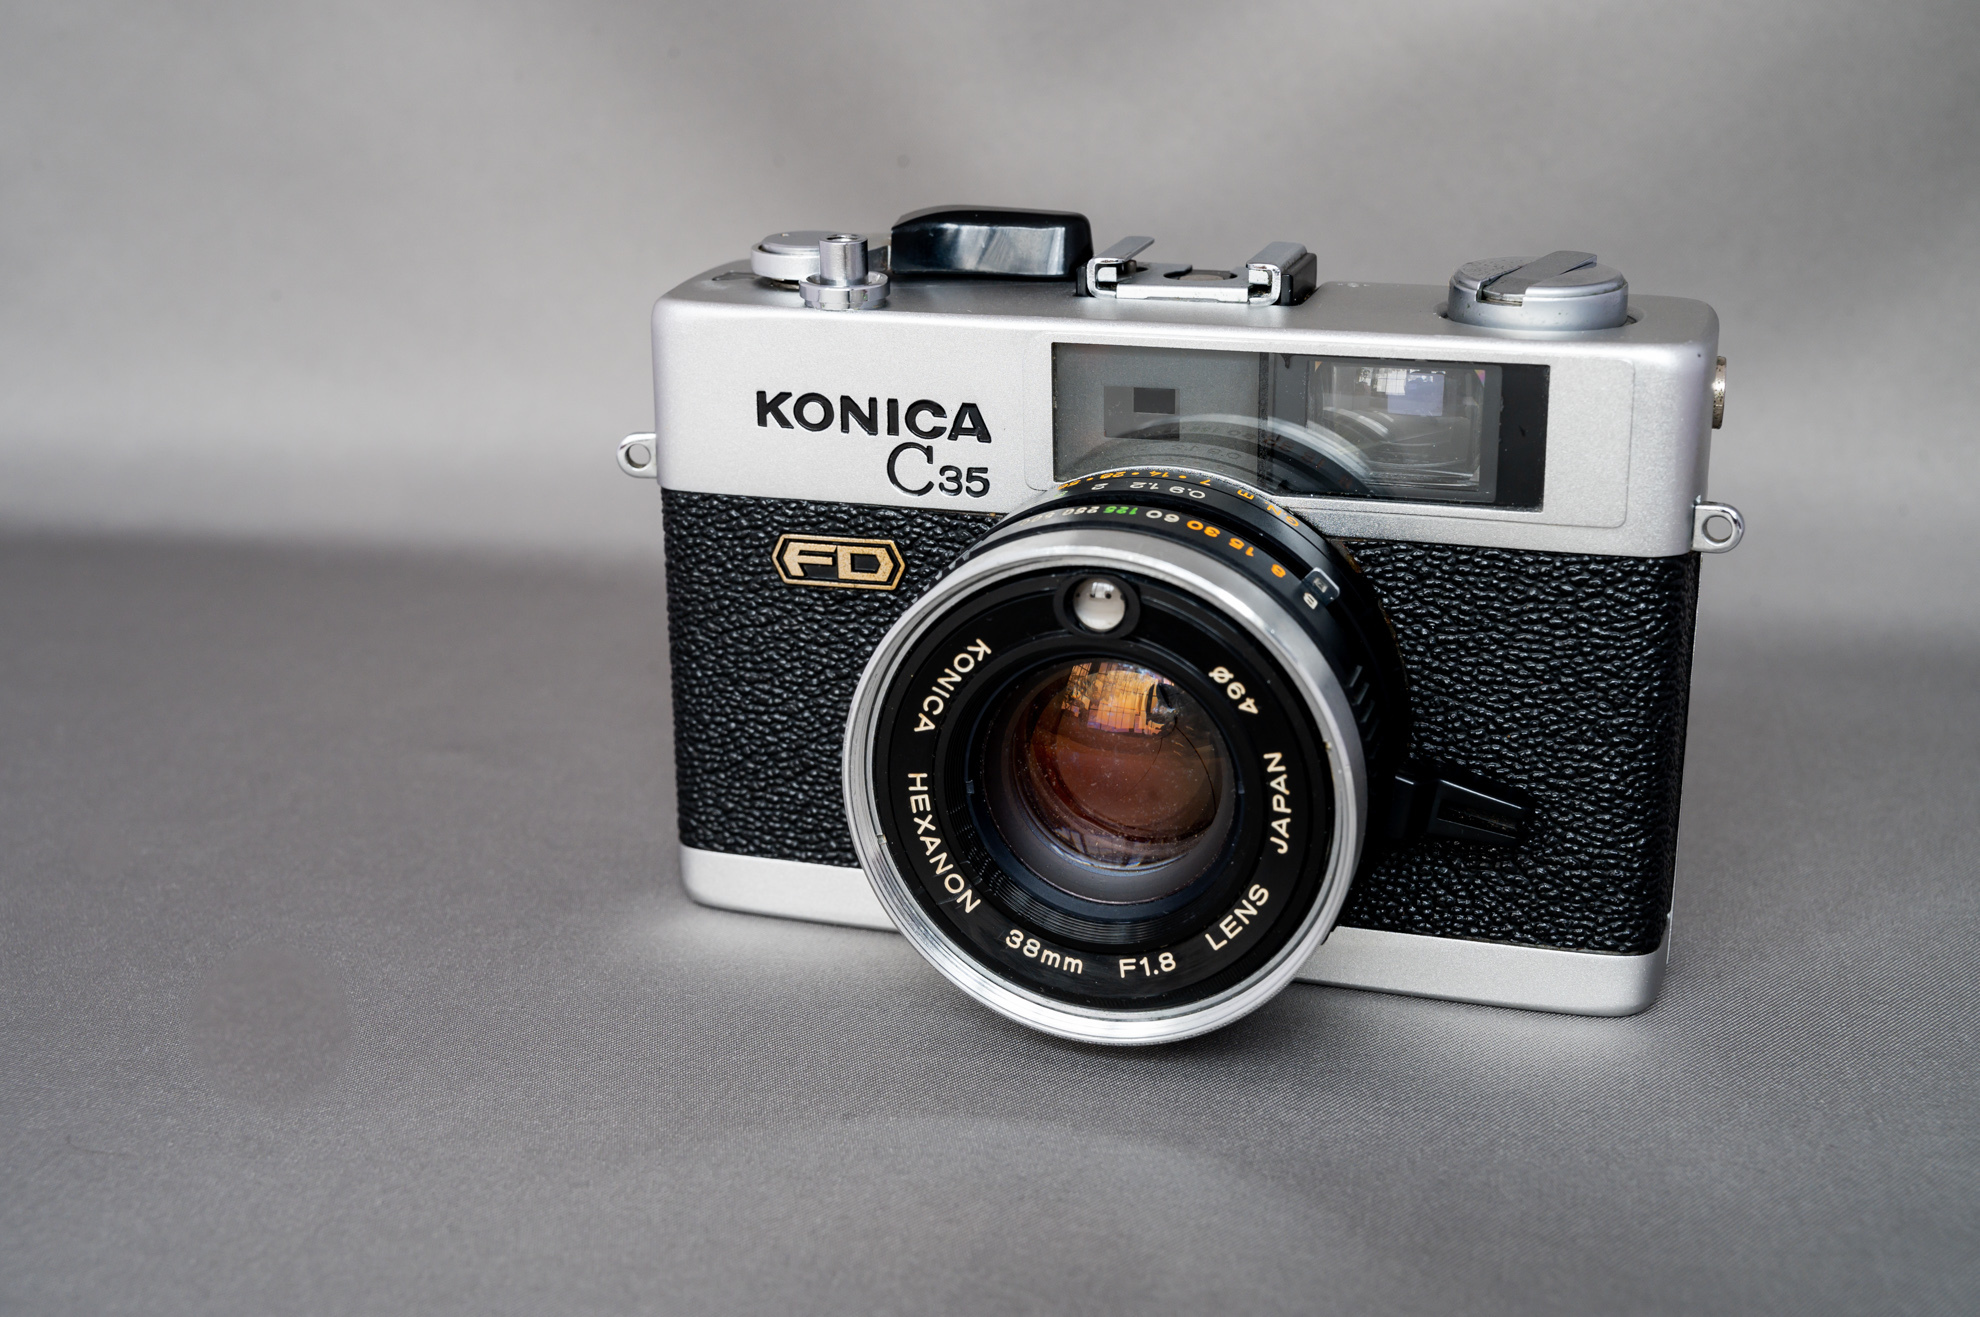 KONICA C35 FD ◇レビュー 修理・メンテナンス編◇ - フィルムカメラ